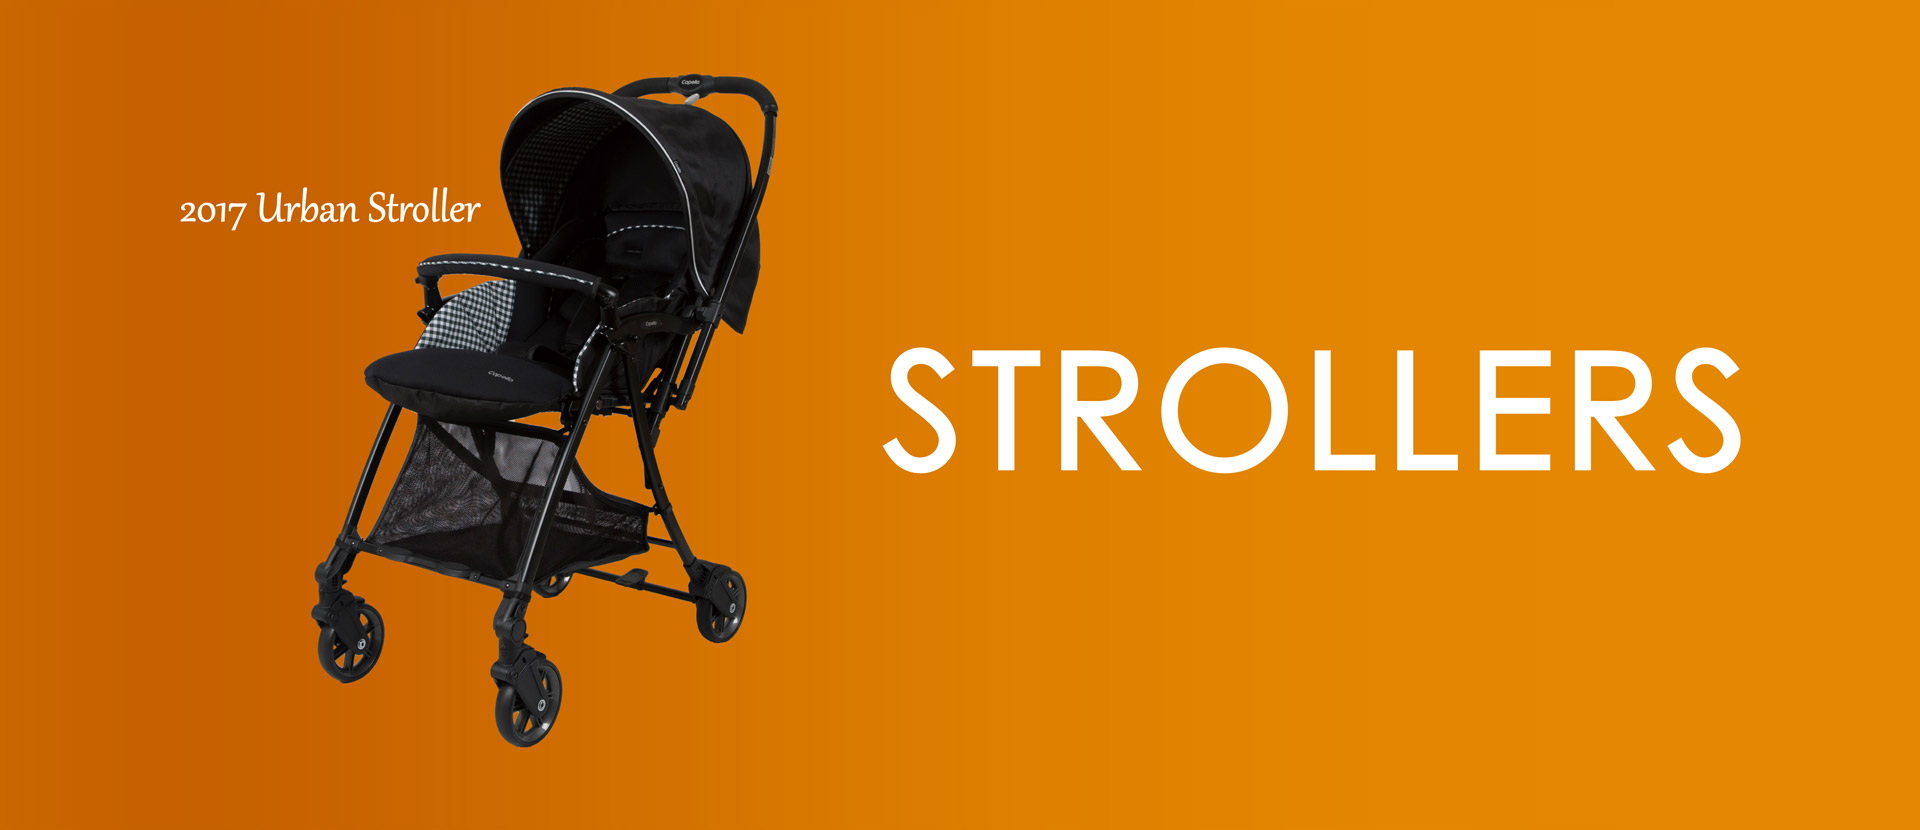 capella baby stroller price